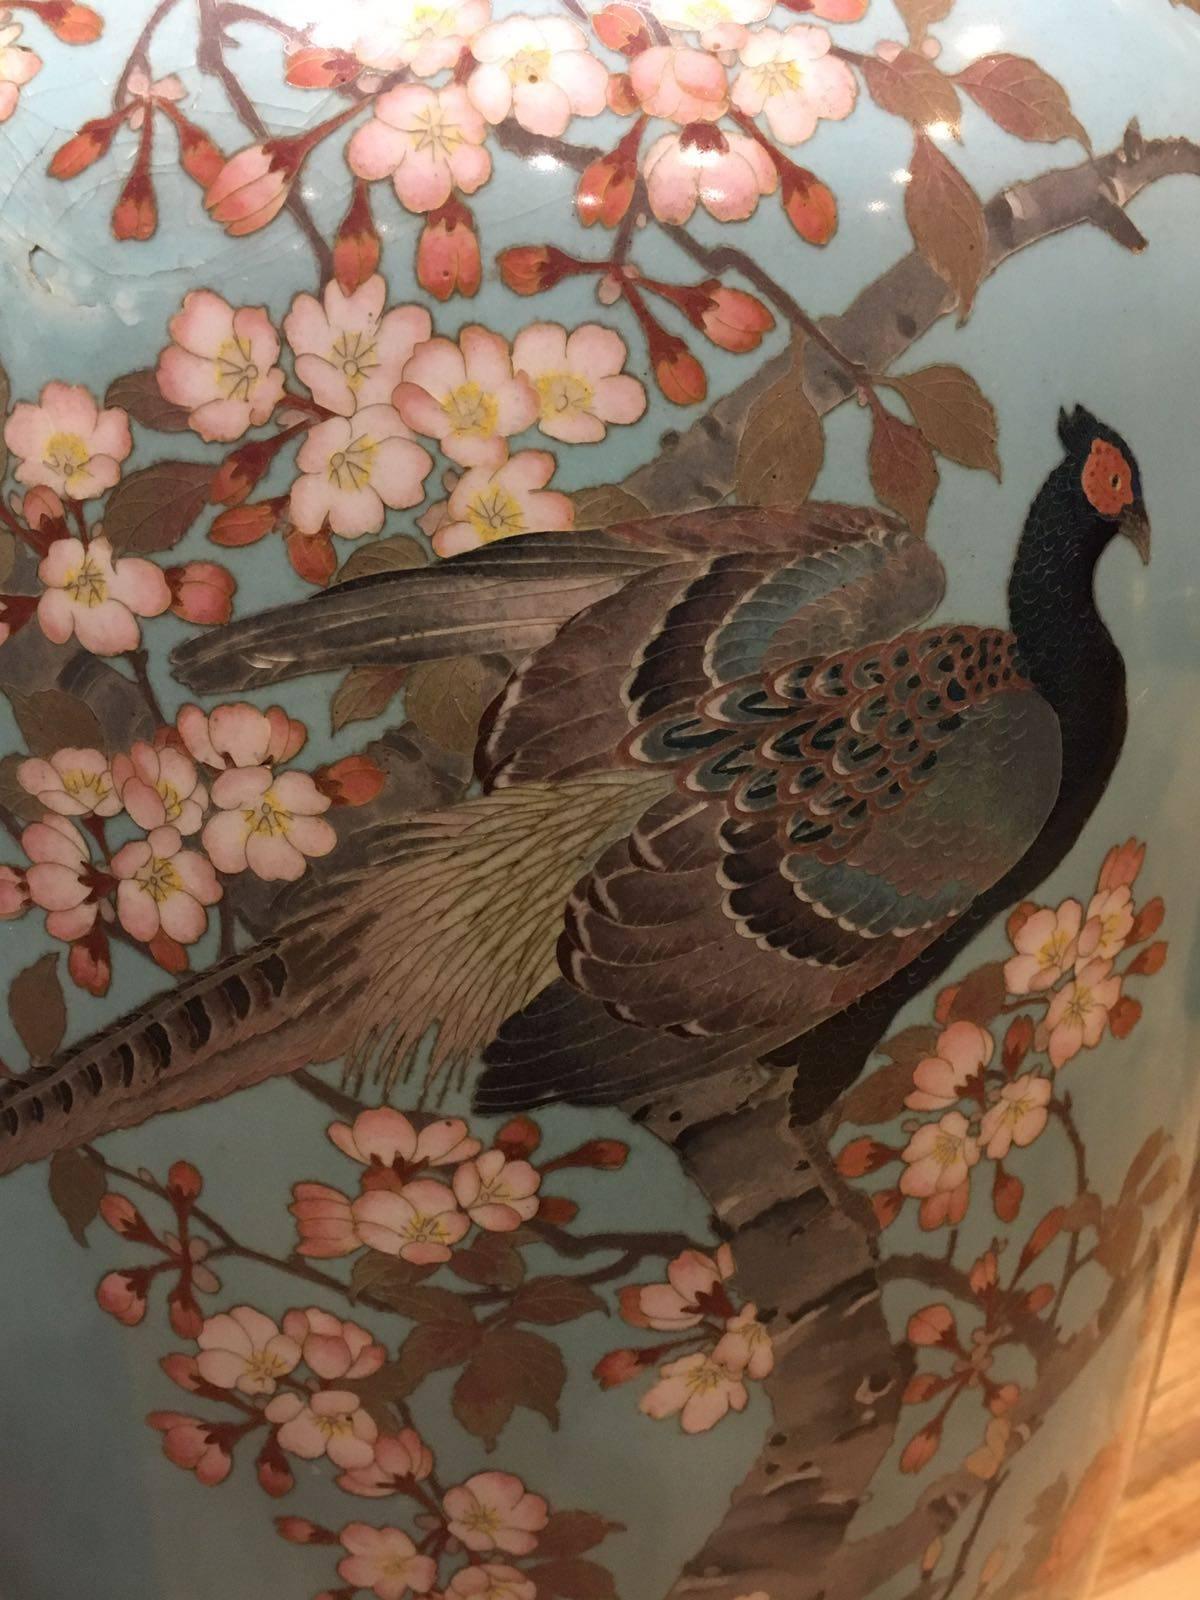 19th century Japanese, Meiji period vase.